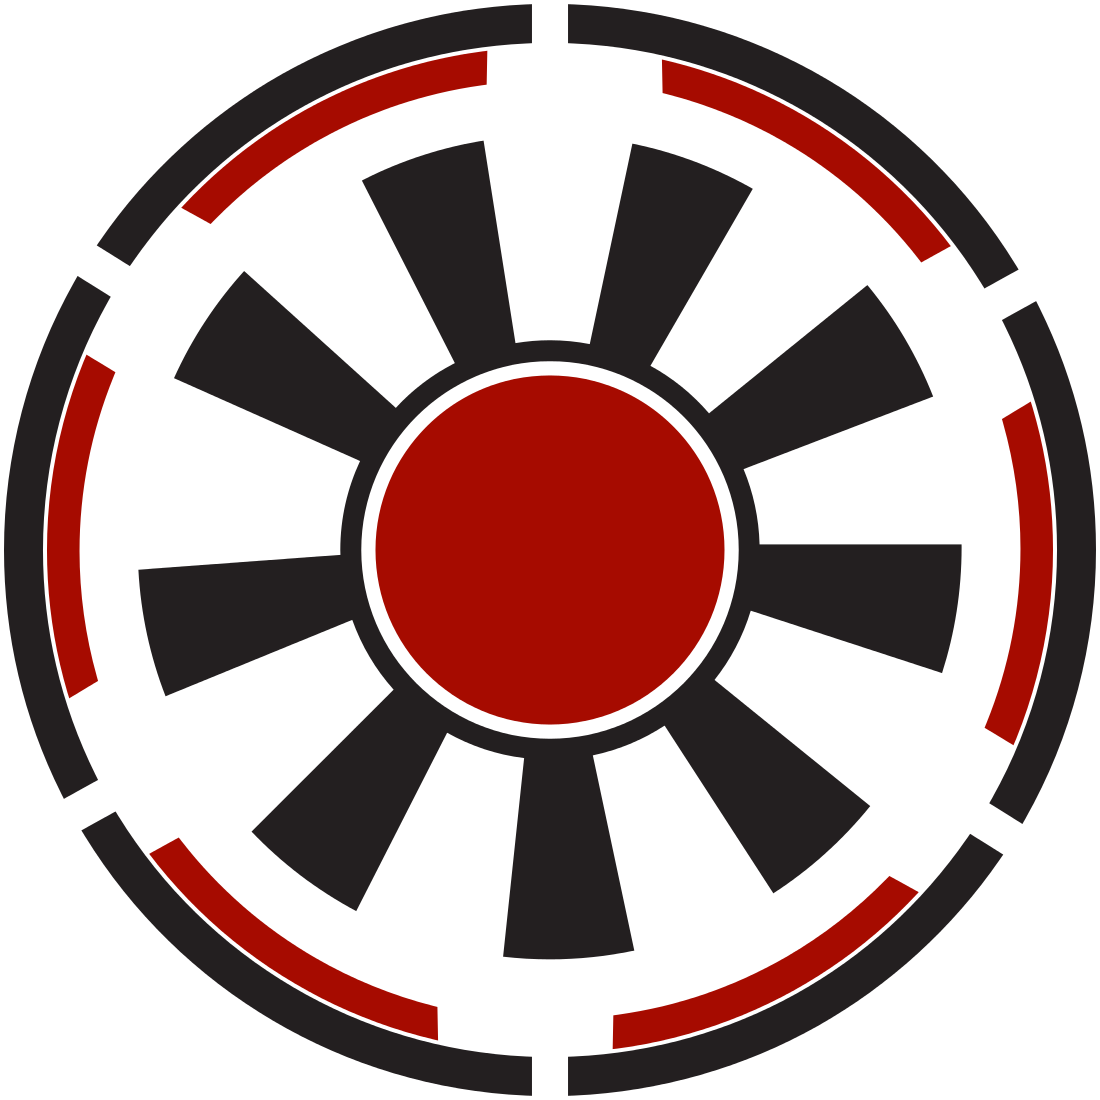 Star Wars Galactic Empire Symbol PNG image